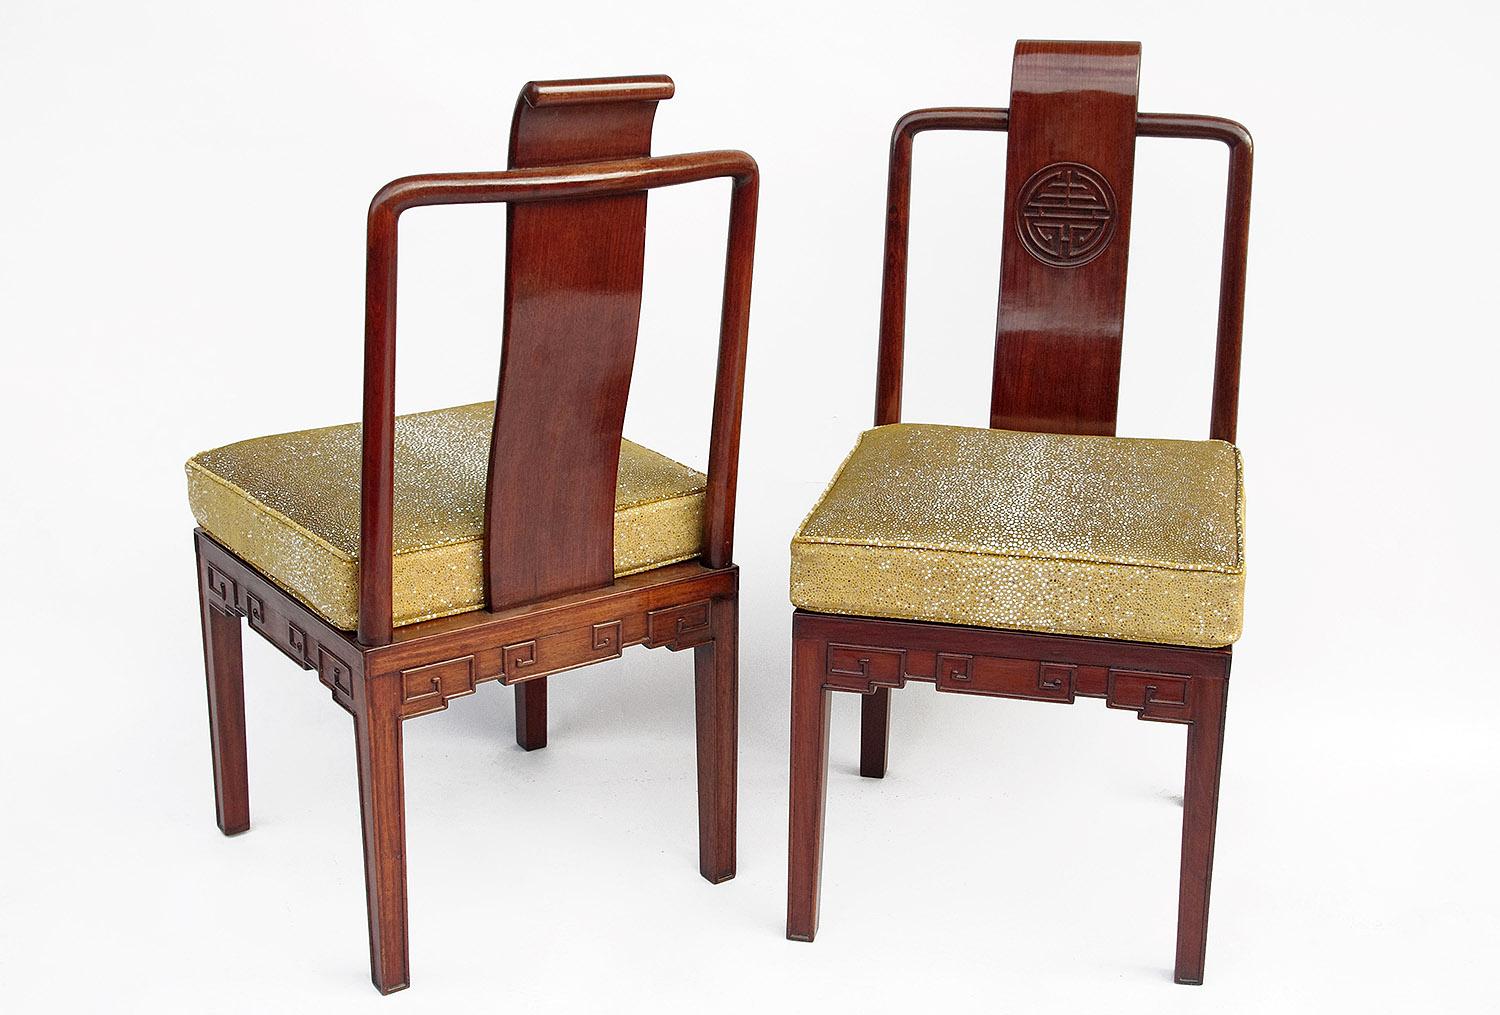 1900 furniture styles